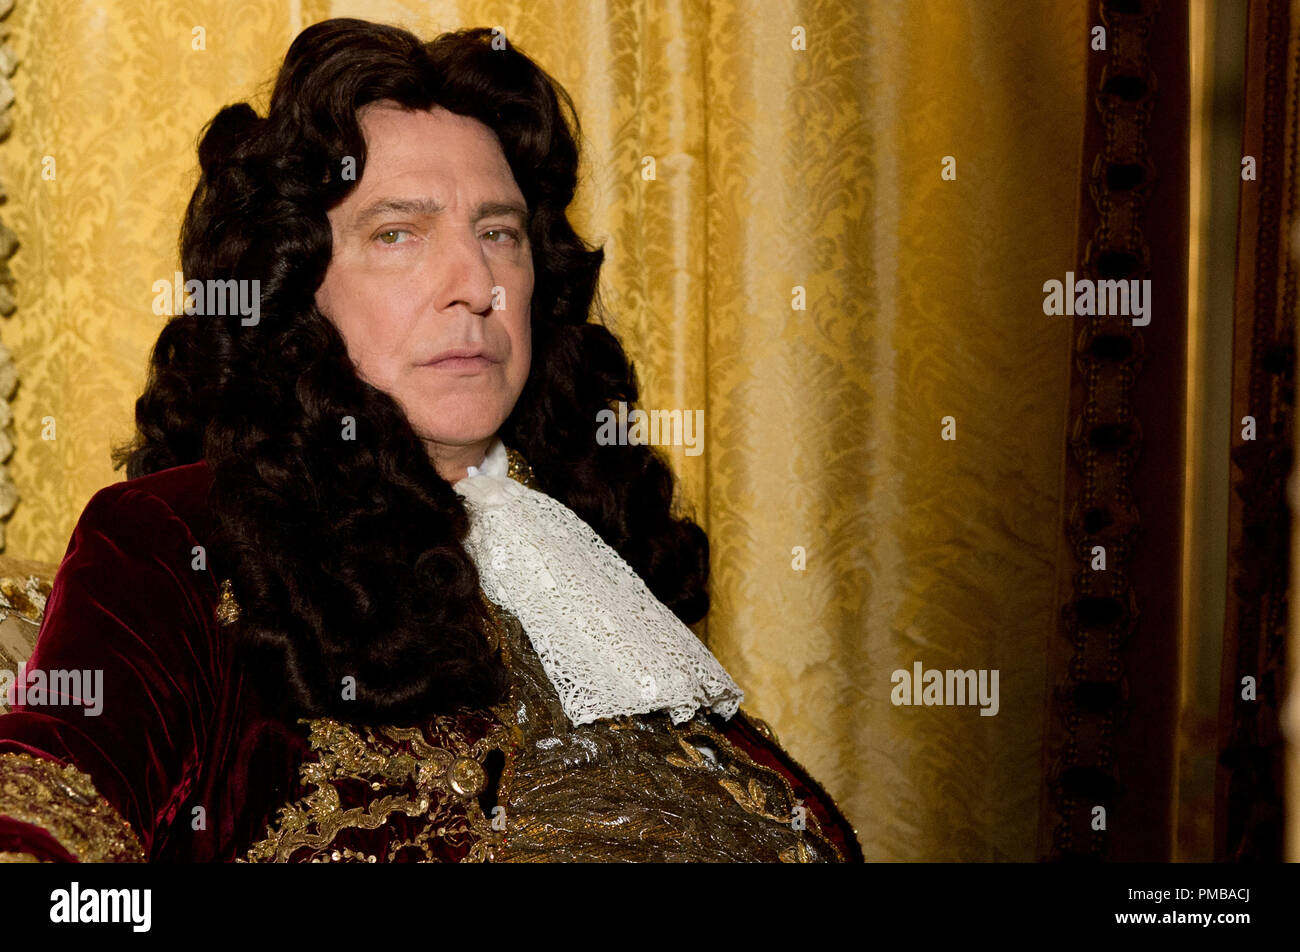 Alan Rickman thankful for lightweight Louis XIV wig